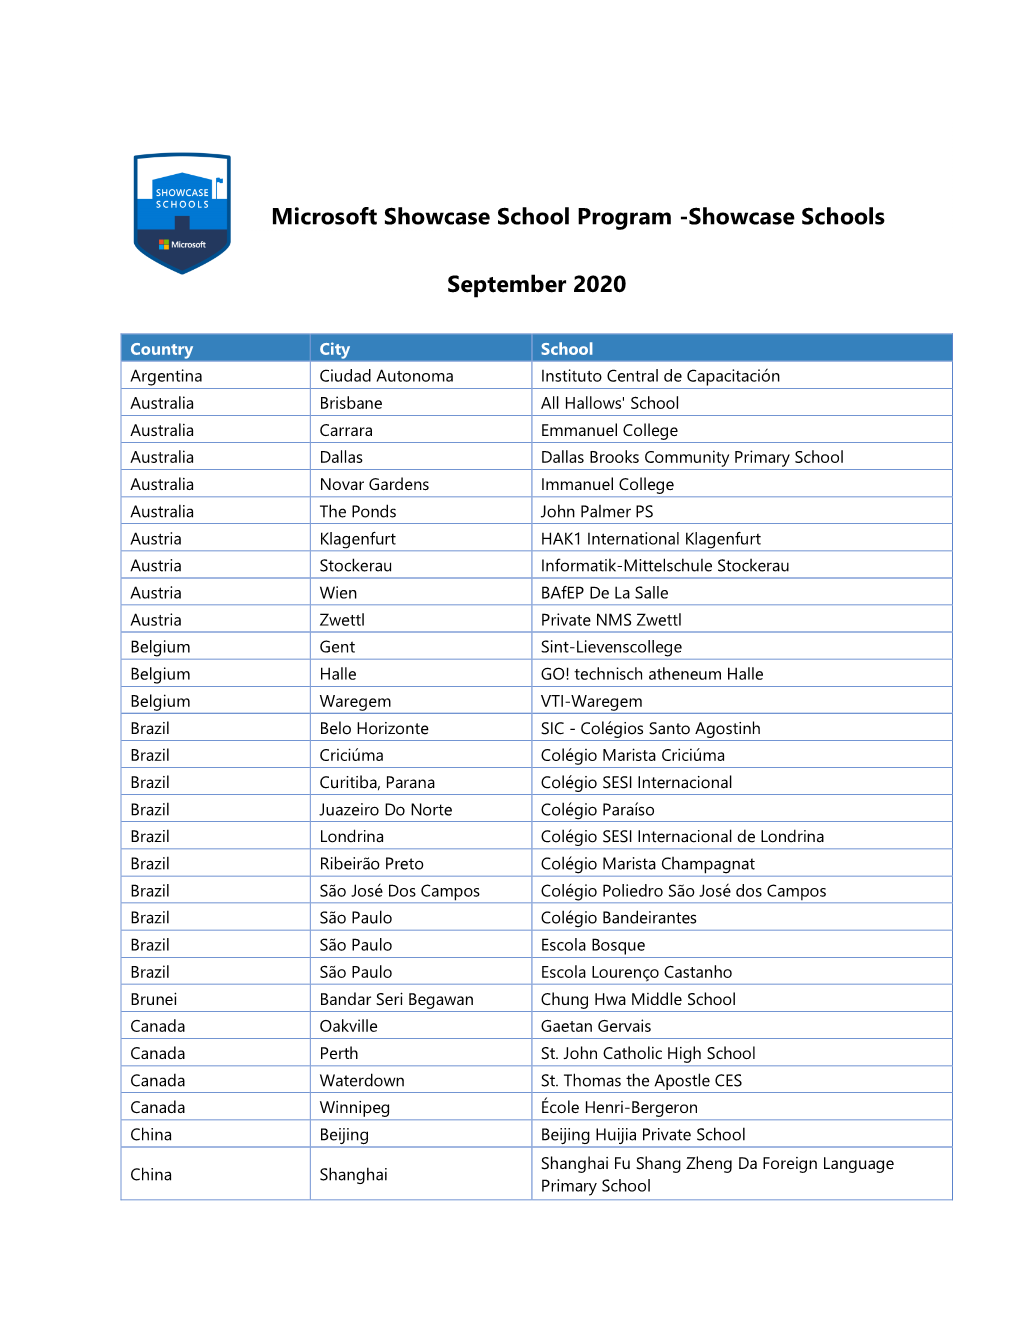 Microsoft Showcase School Program -Showcase Schools September 2020